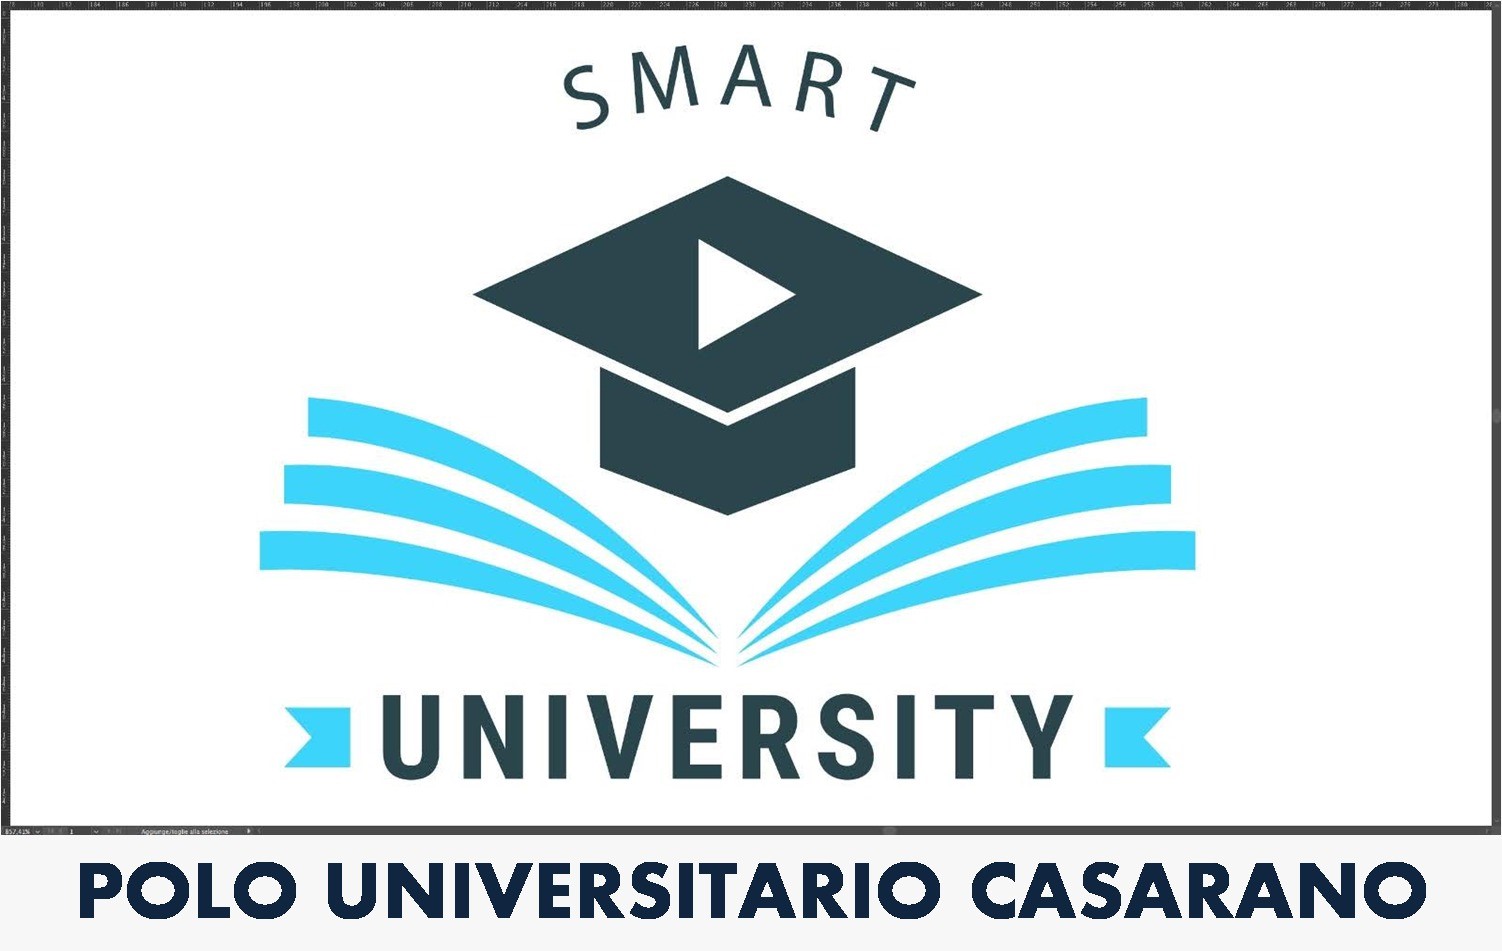 Smart-University